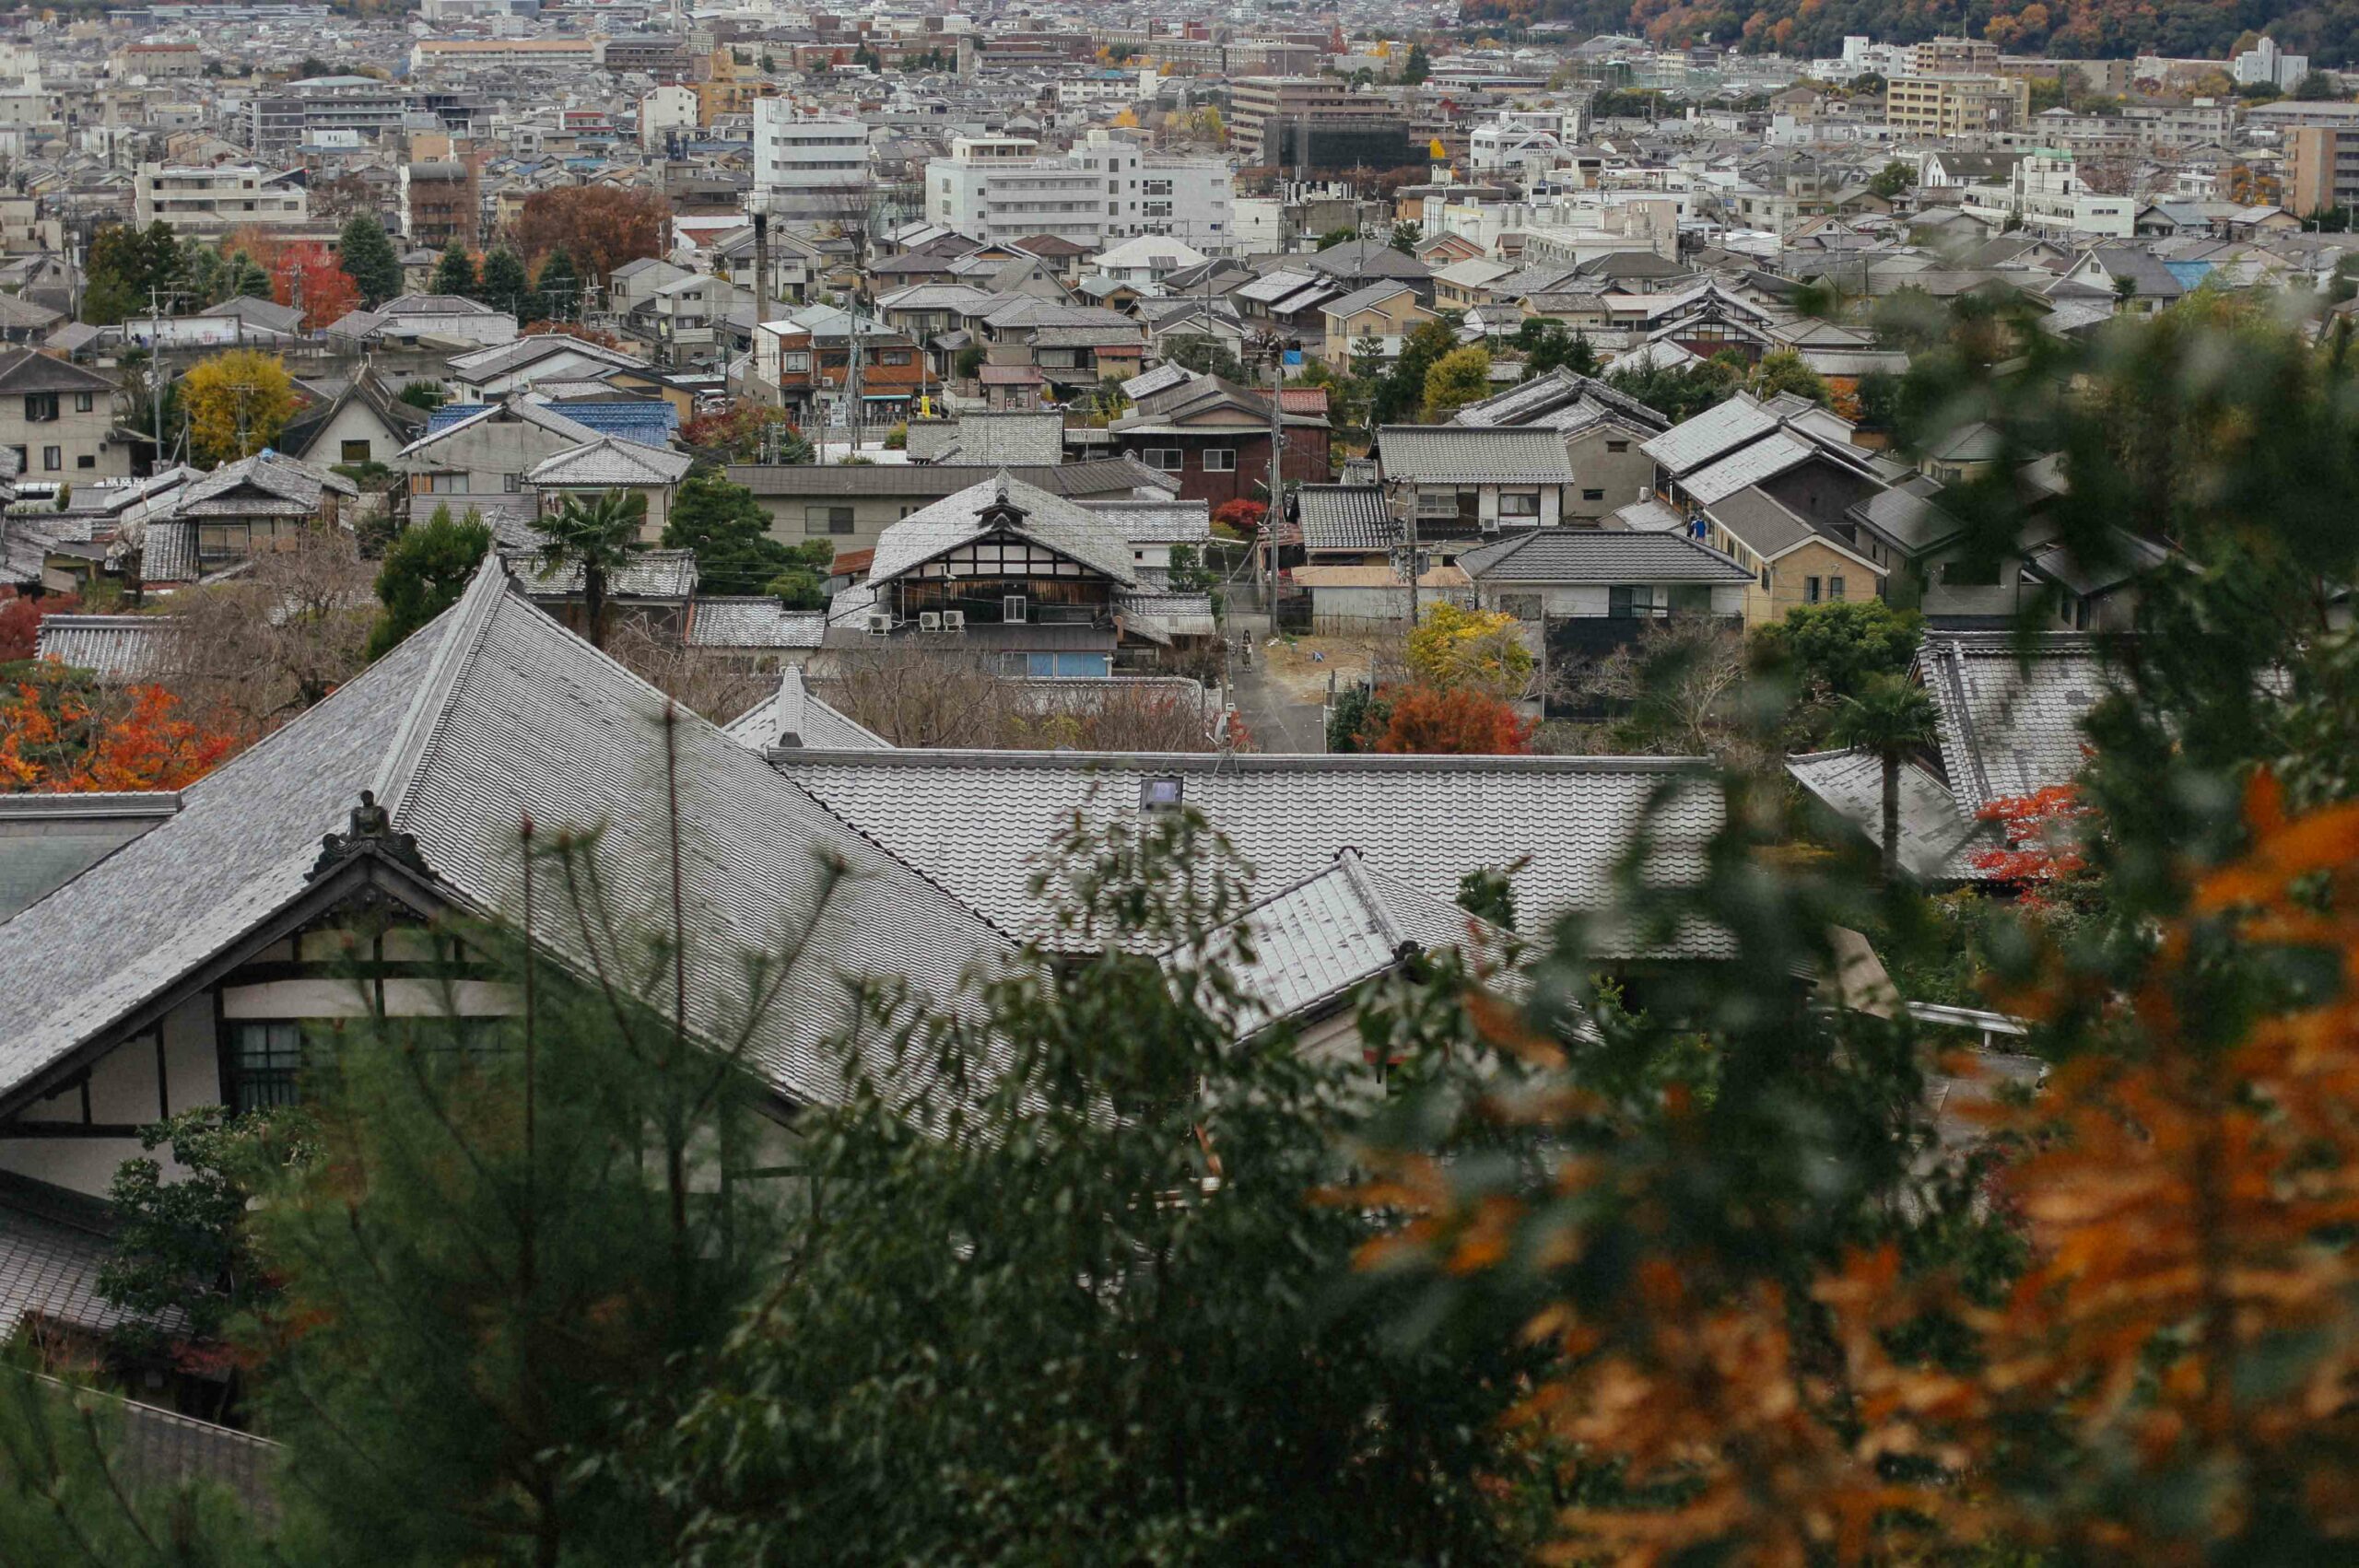 Enkoji's adjoining hills offer spectacular views over Kyoto city.